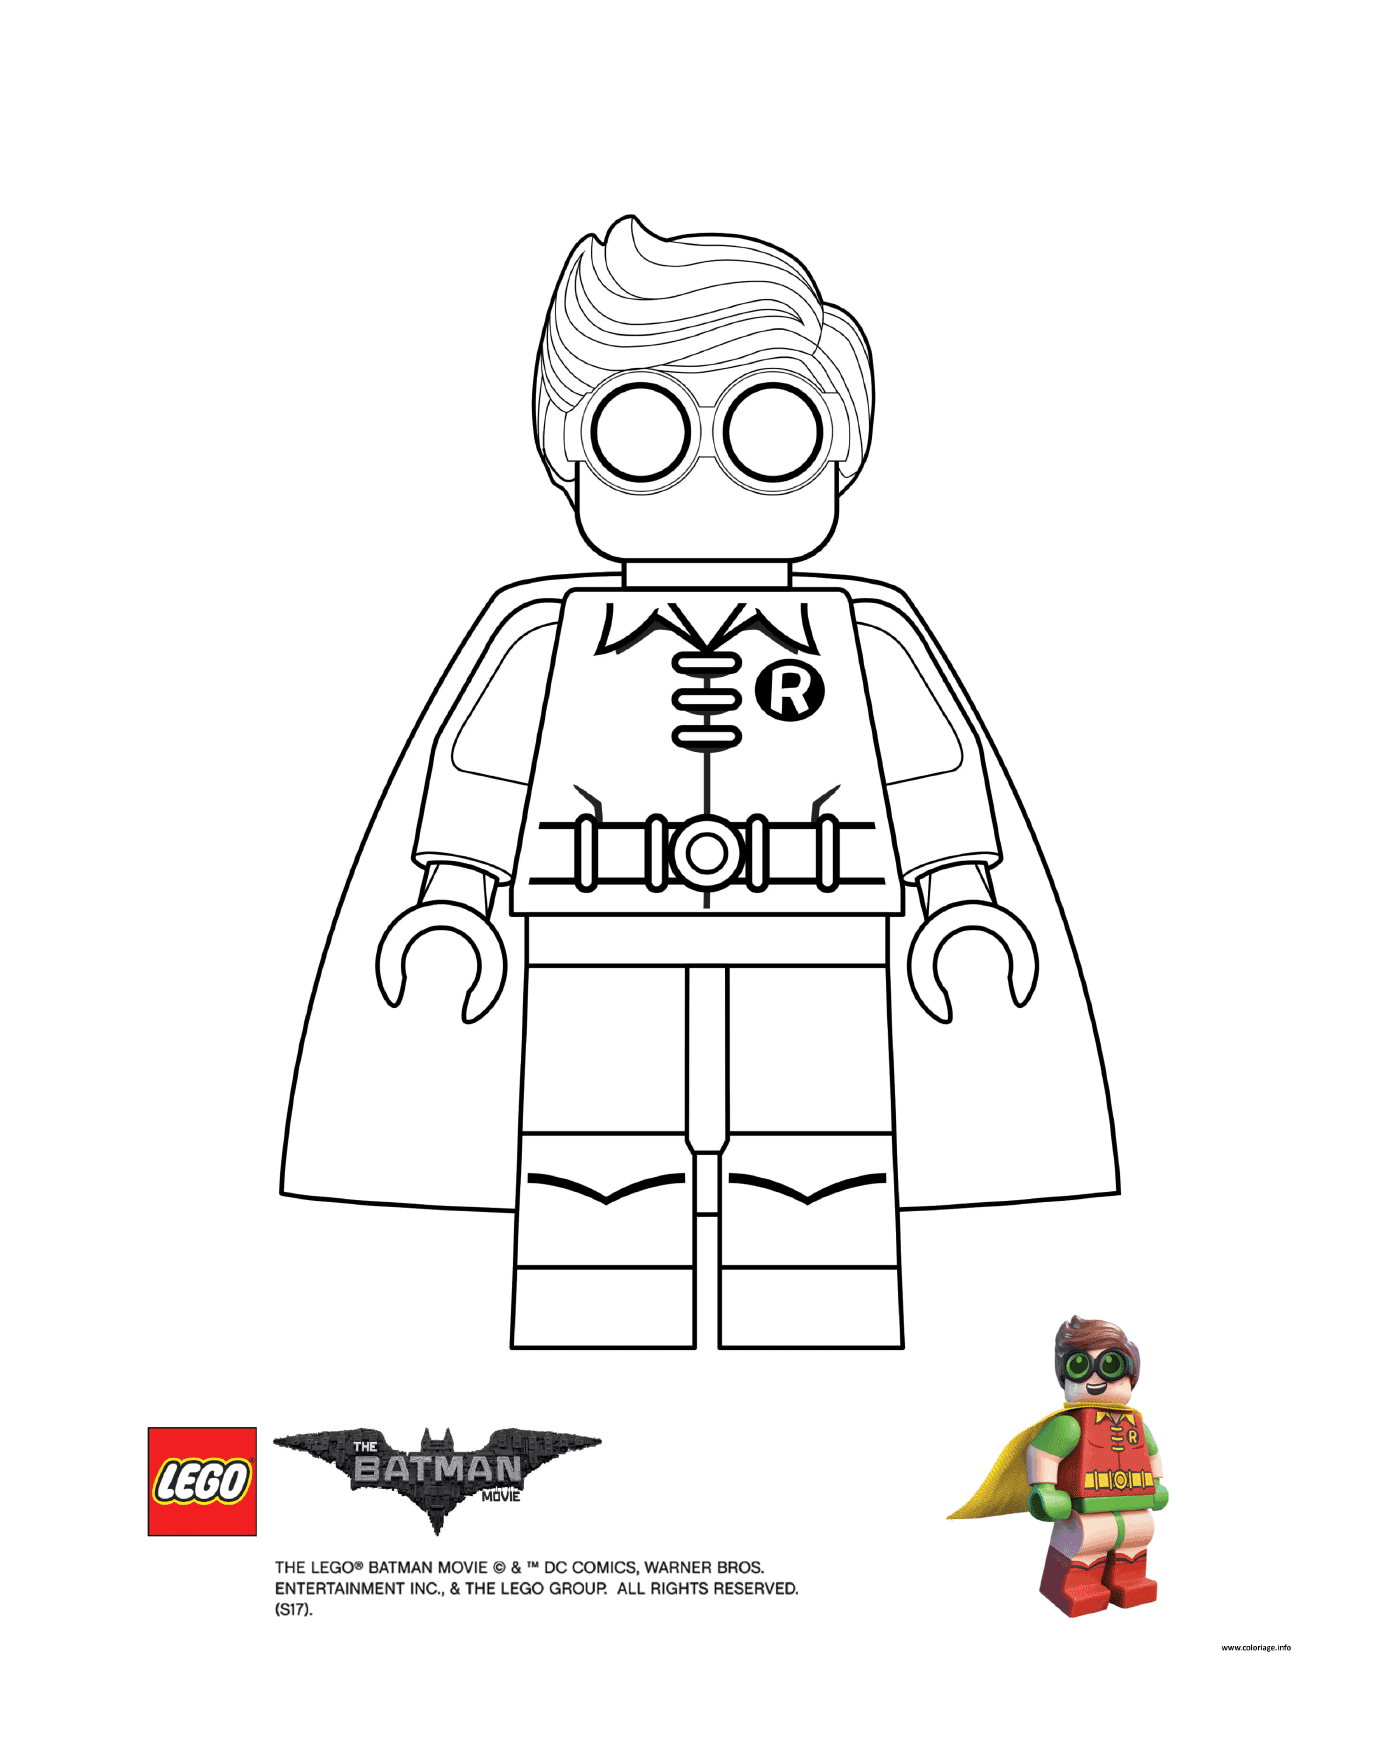  Robin in the movie Lego Batman 